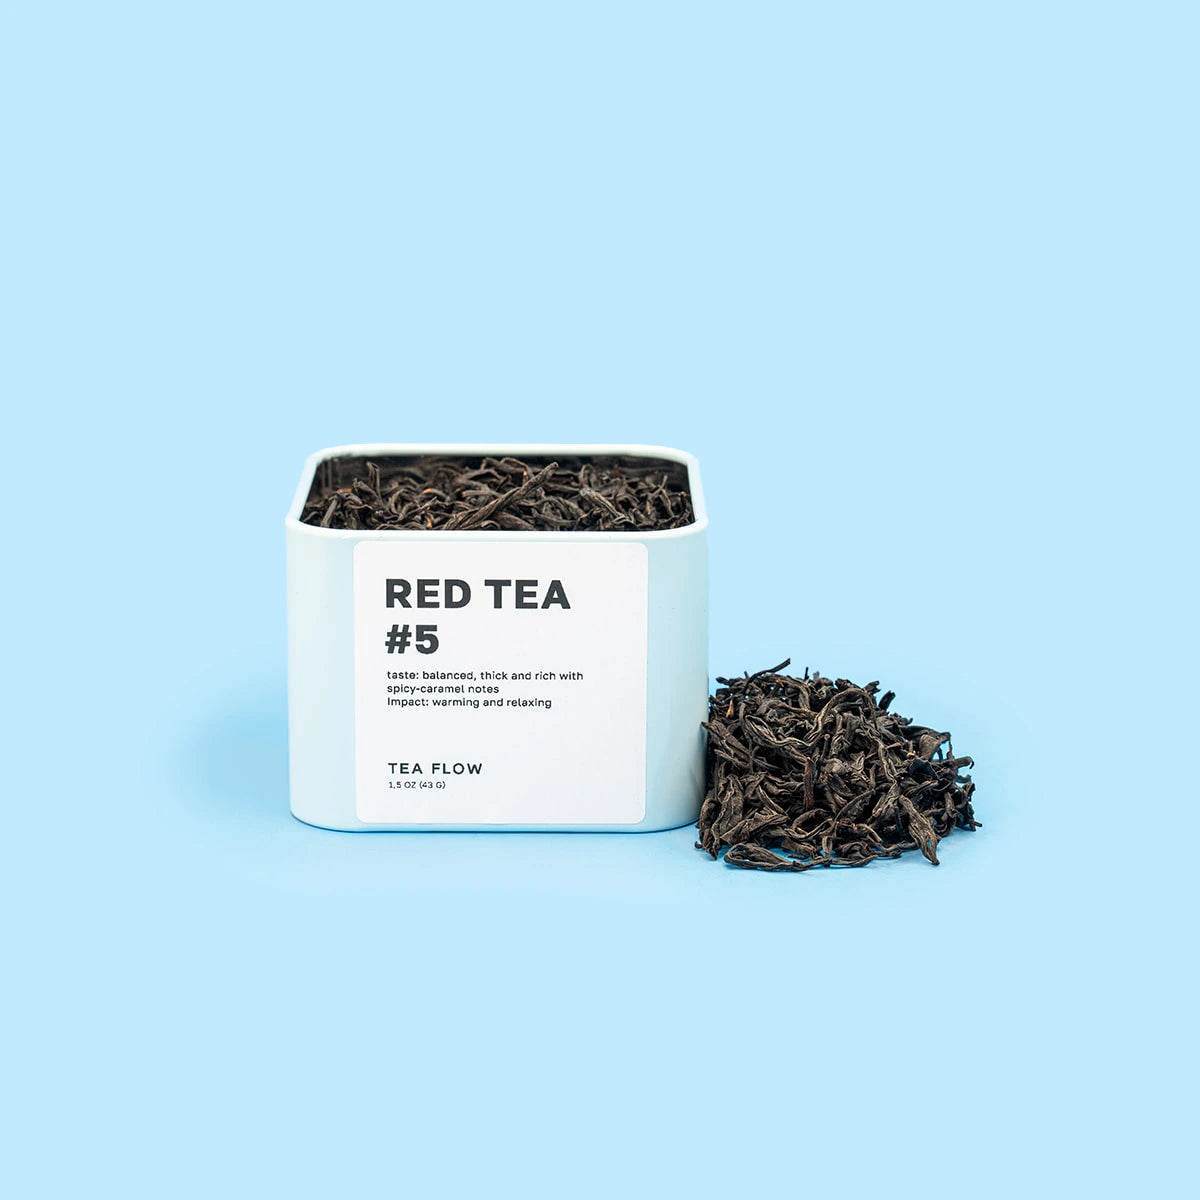 RED TEA #5